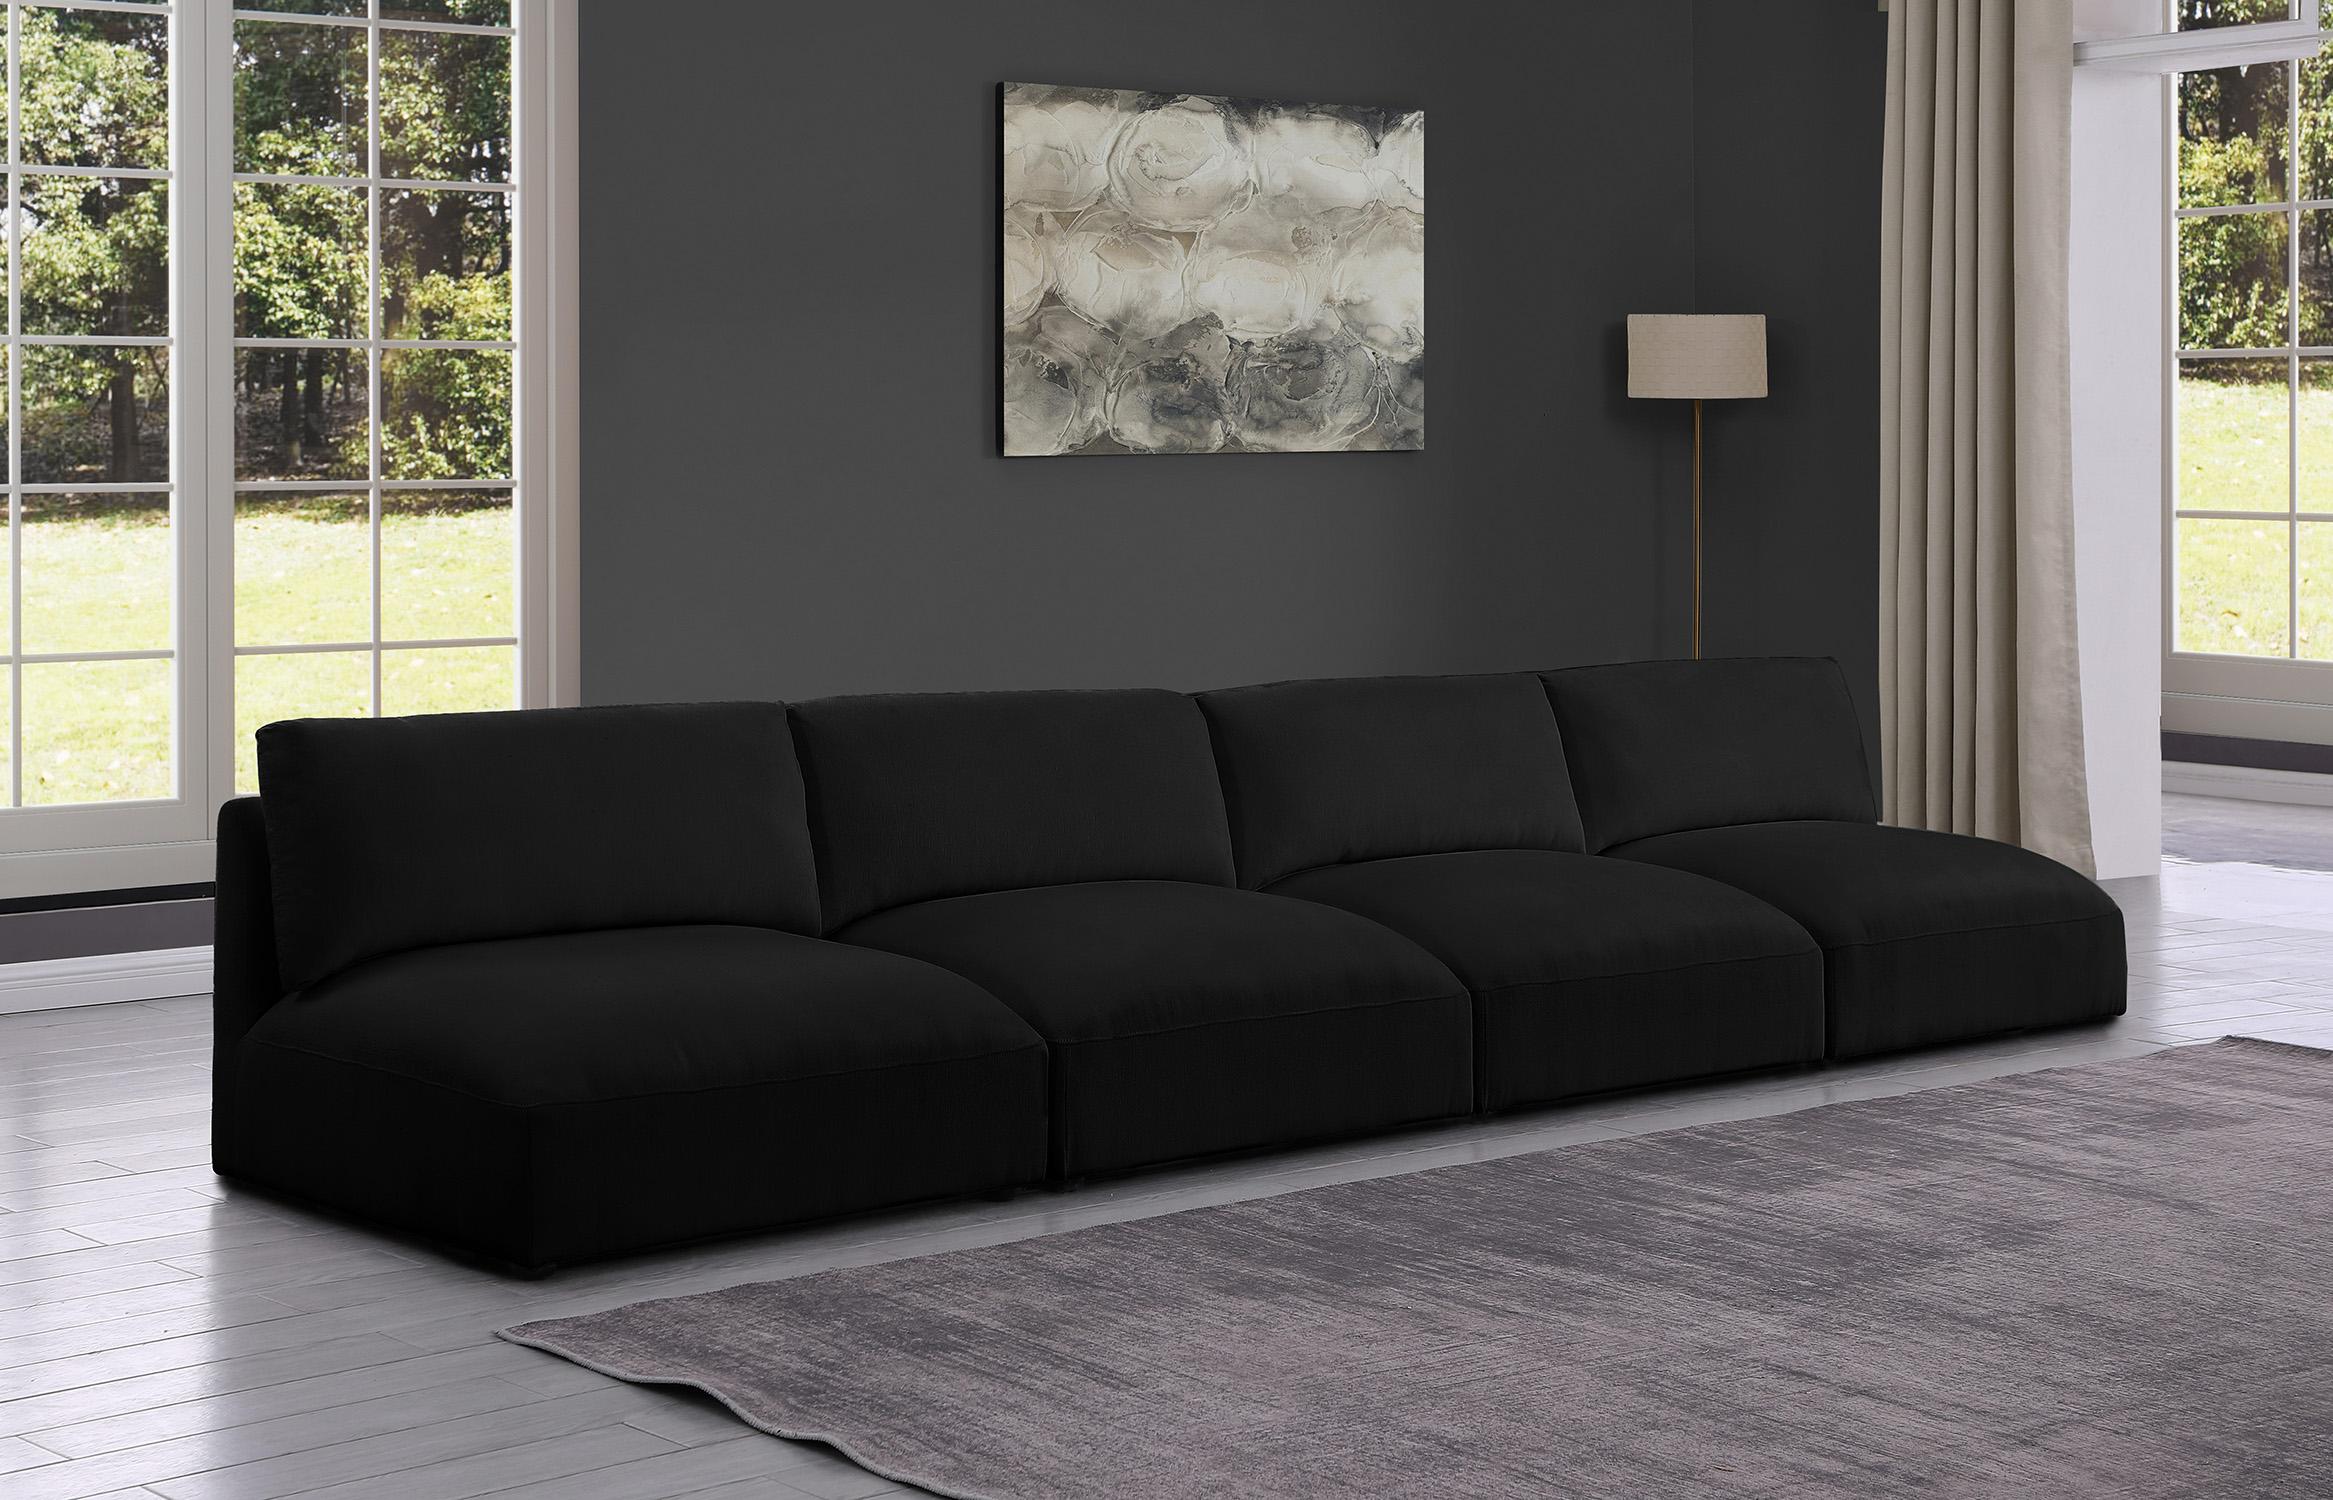 

    
Plush Black Fabric Modular Sofa EASE 696Black-S152A Meridian Modern Contemporary
